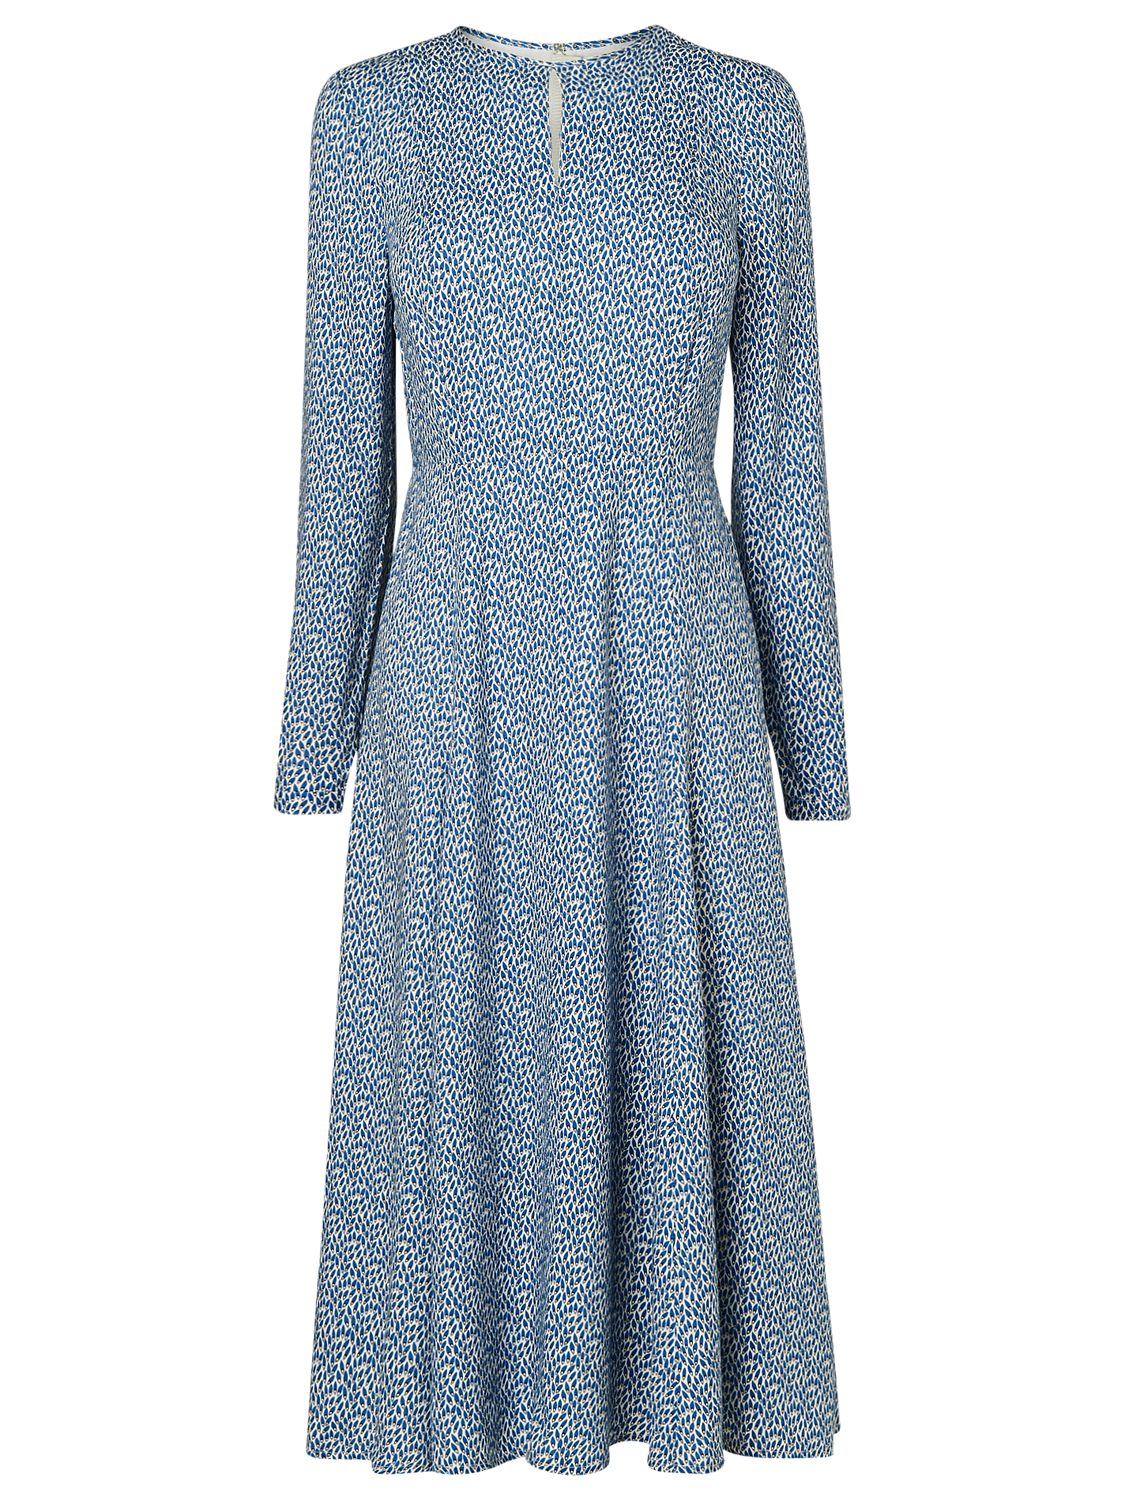 L.K. Bennett Freddie Dress, Printed Dress